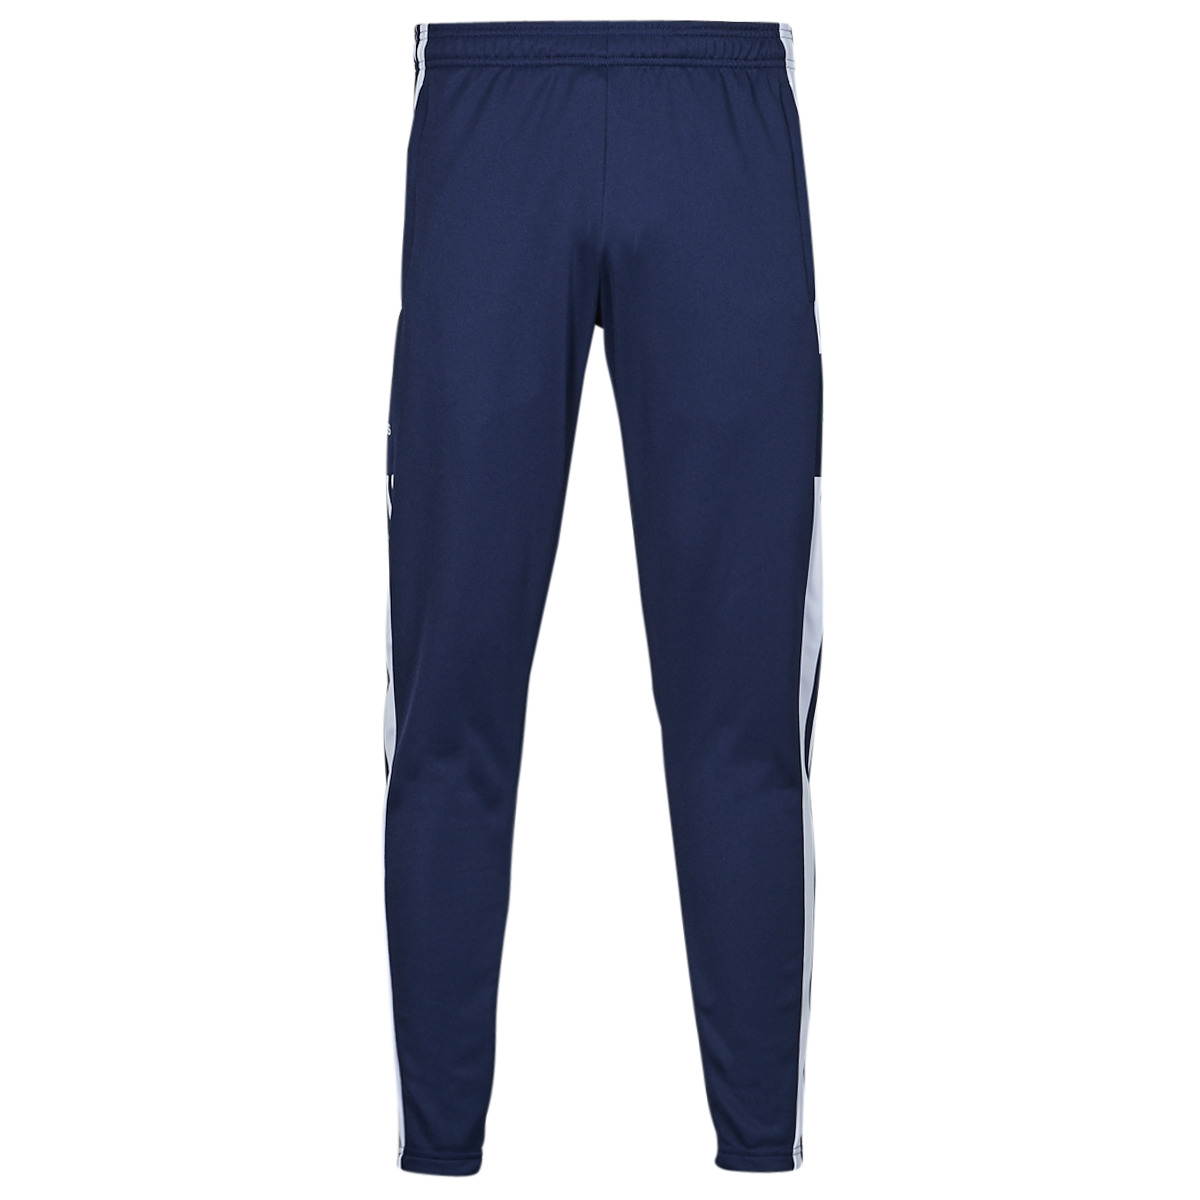 Vêtements Homme Pantalons de survêfootball bc0121 adidas Performance SQ21 TR PNT Marine / Blanc